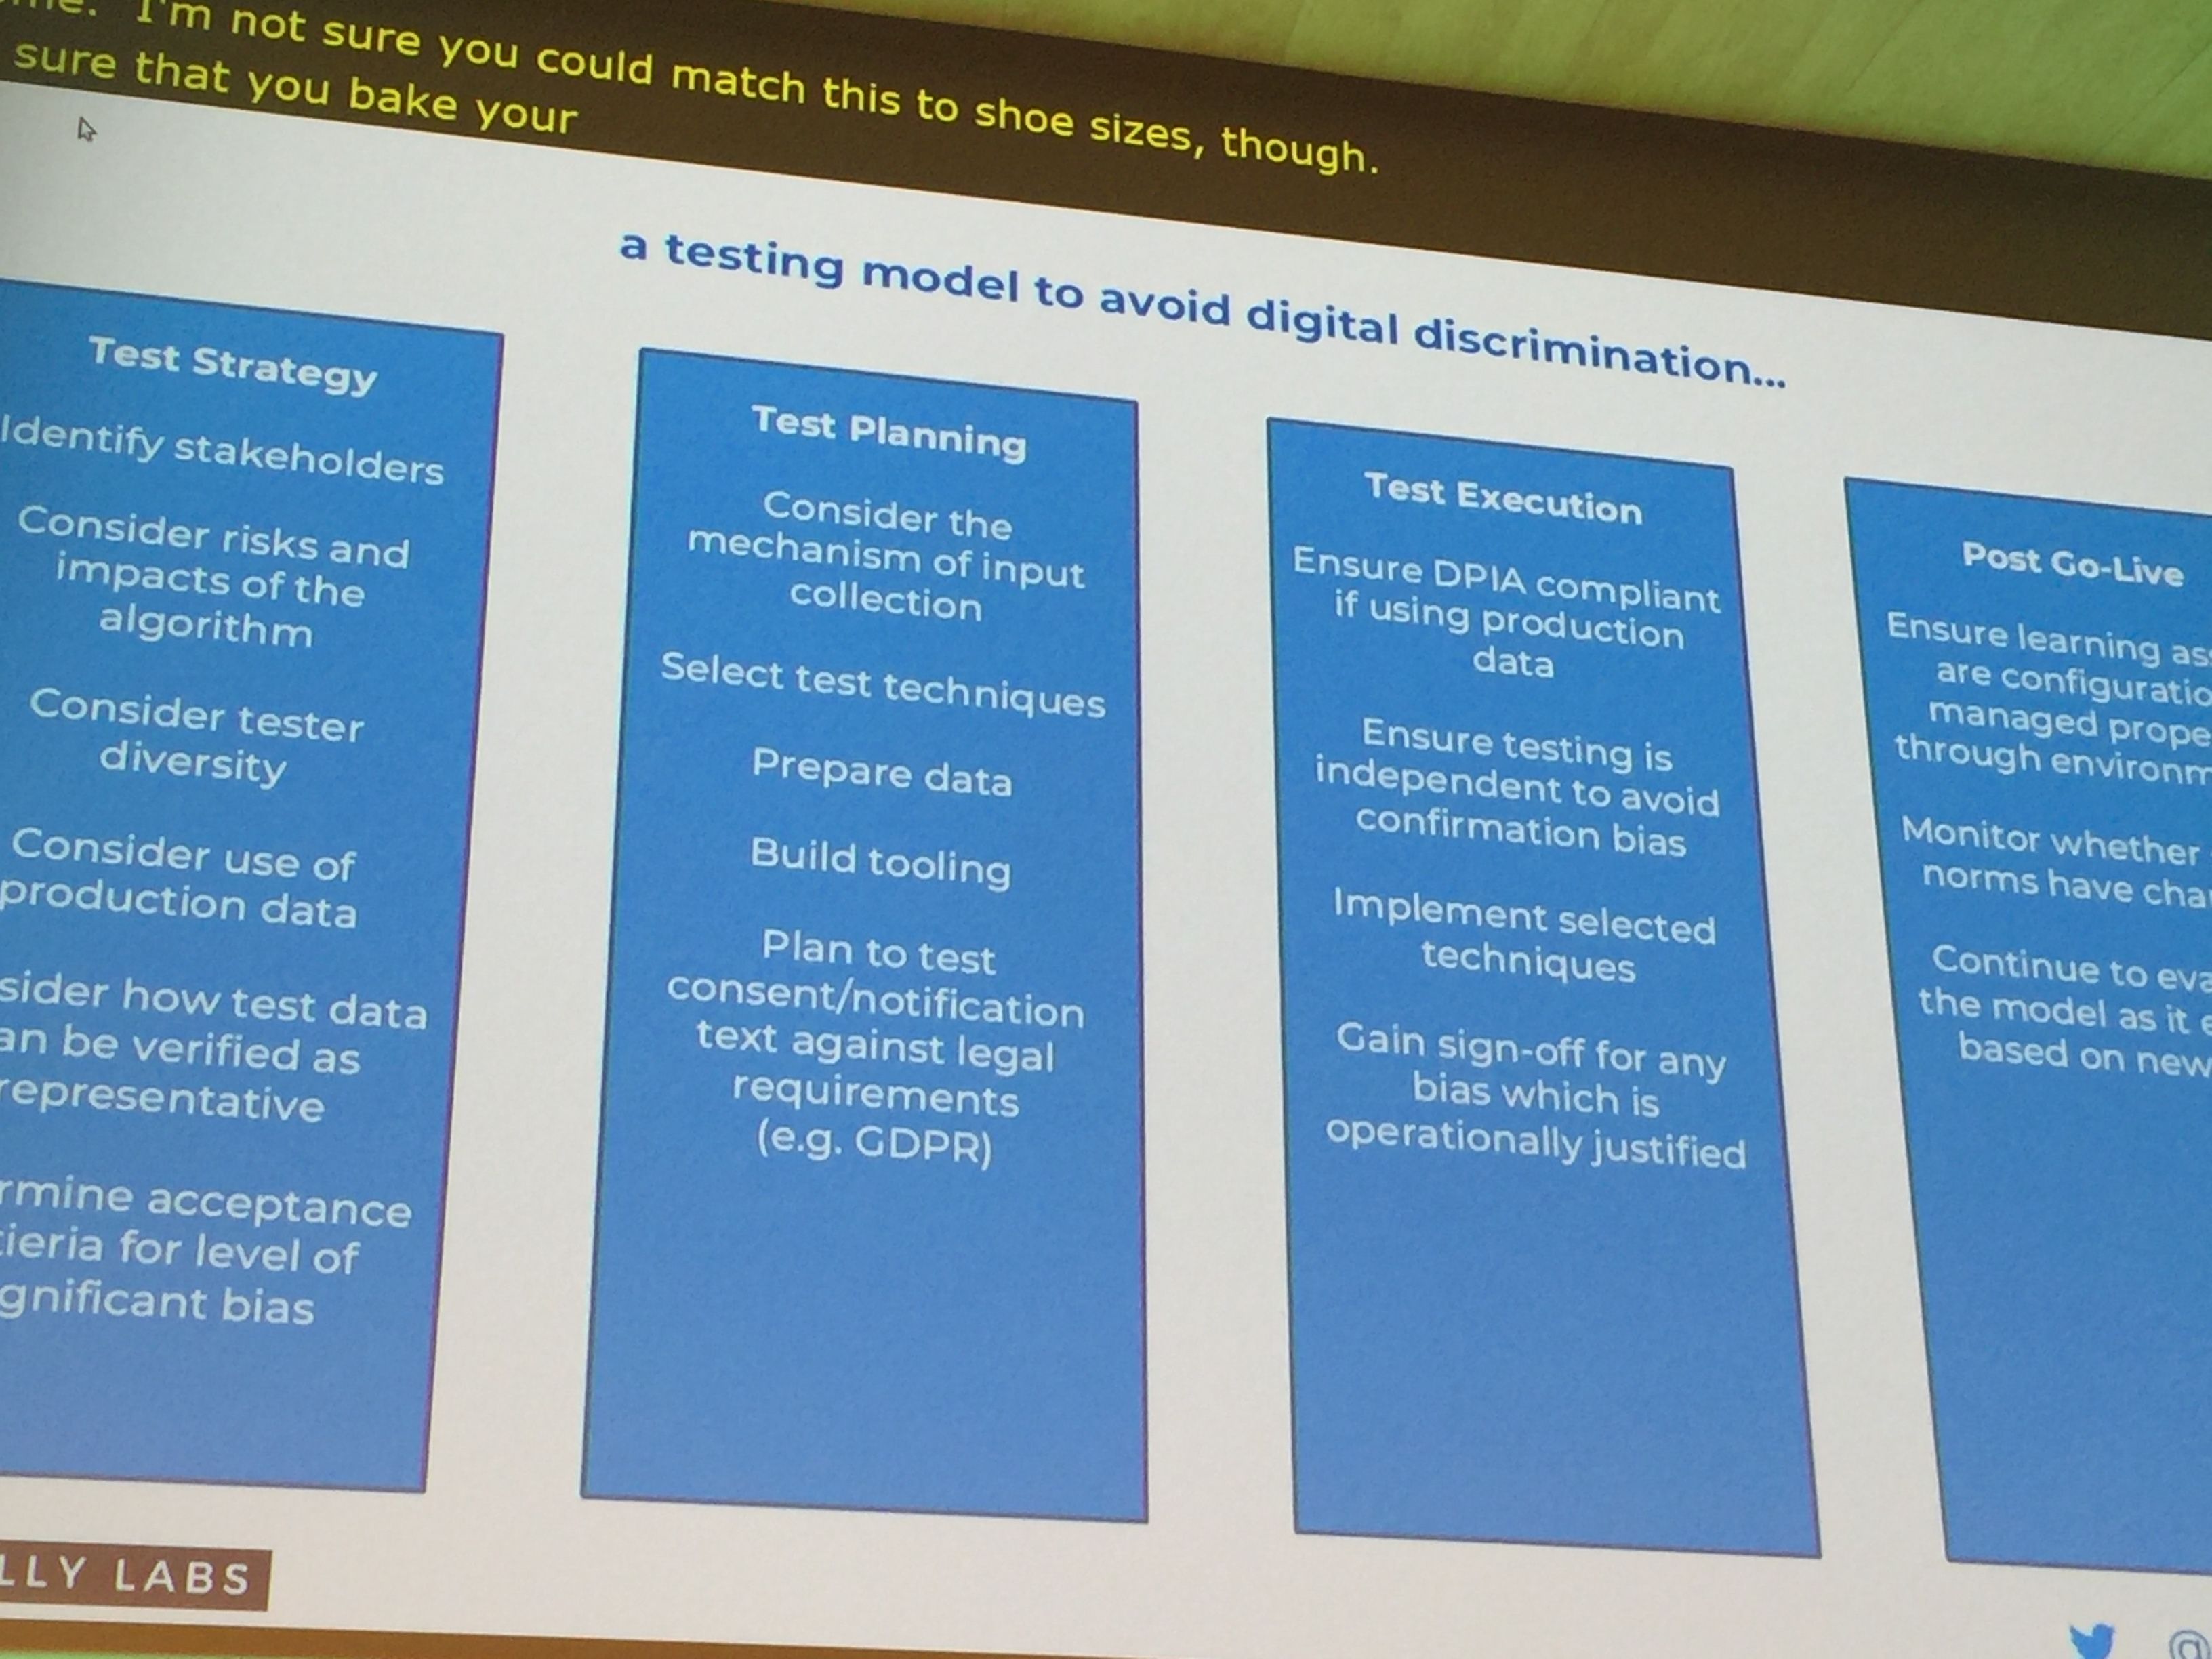 Slide showcasing ways to avoid digital discrimination